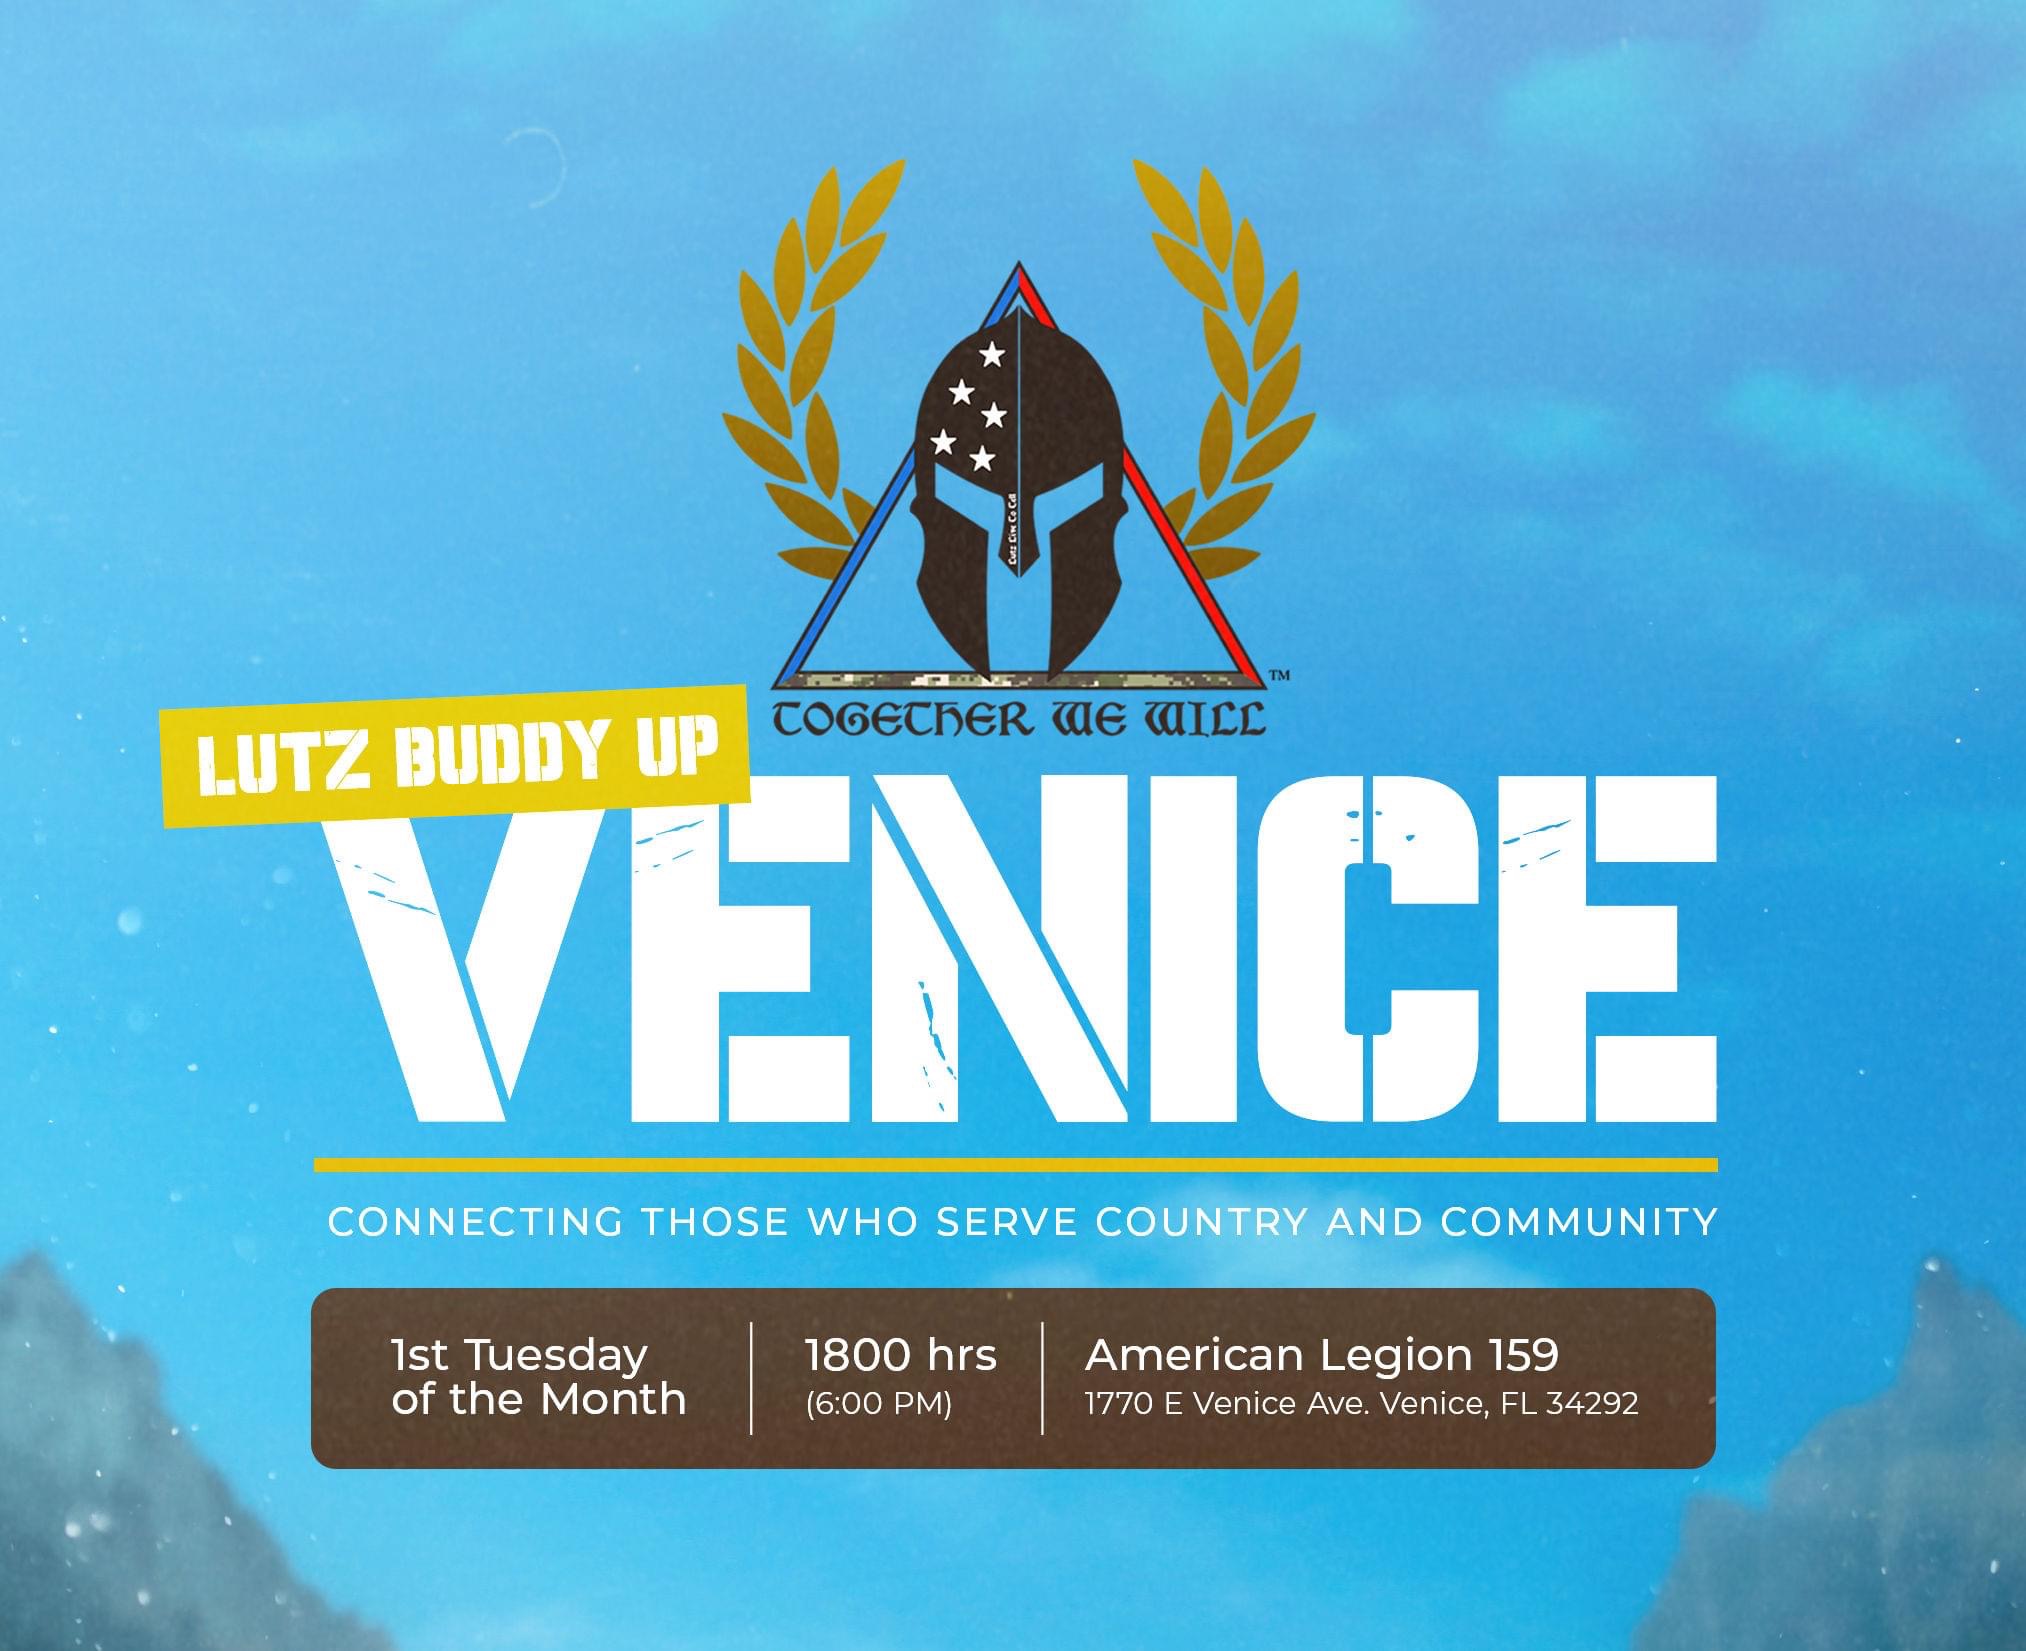 Lutz Buddy Up Venice